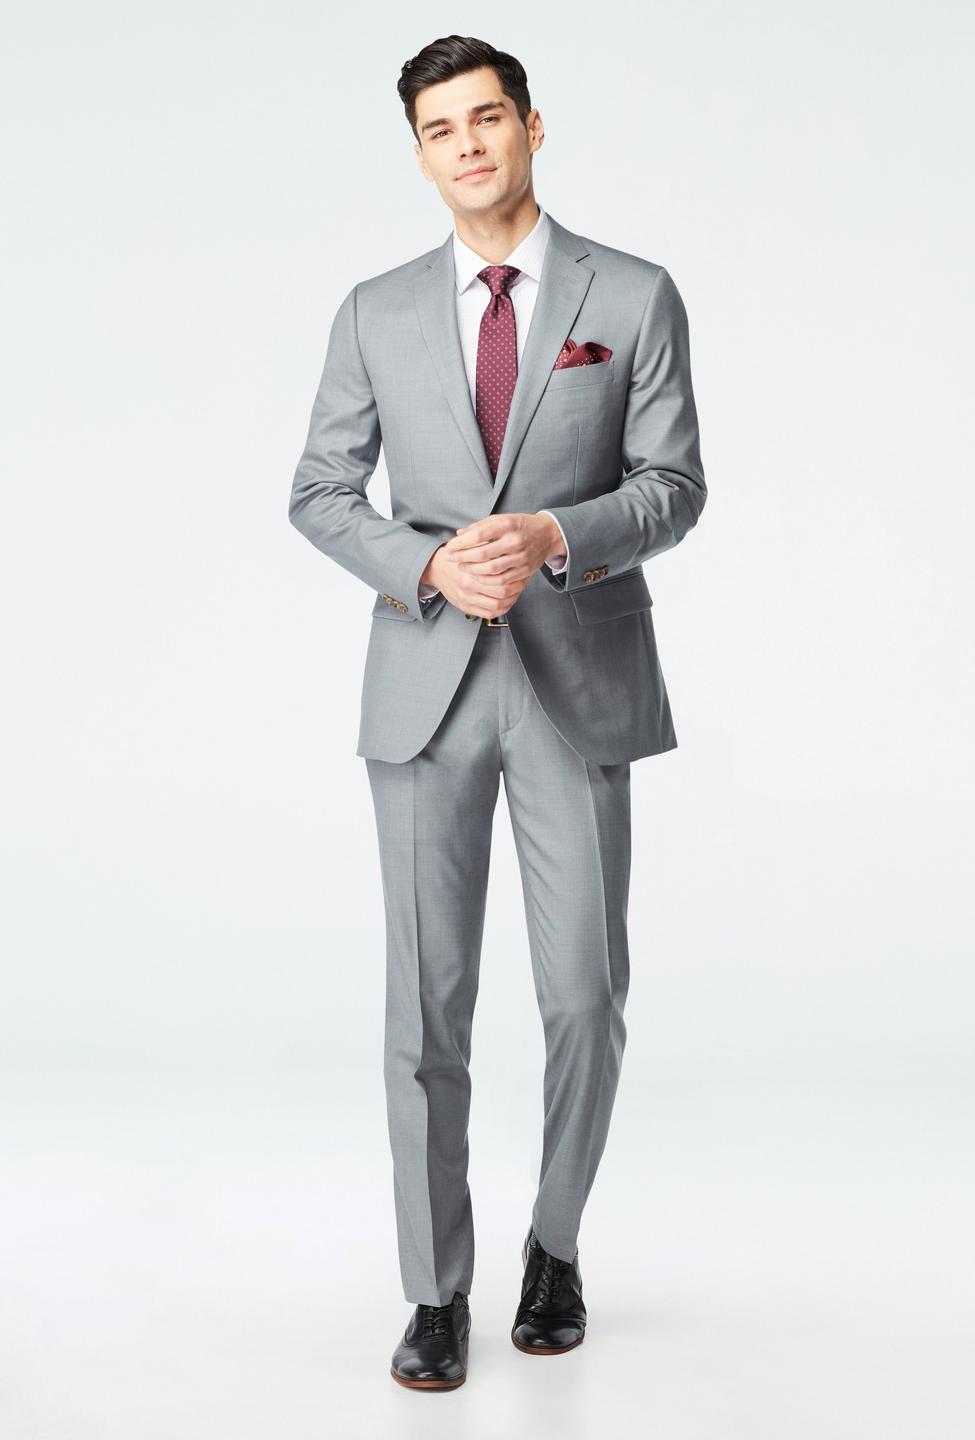 Gray blazer - Highbridge Solid Design from Luxury Indochino Collection